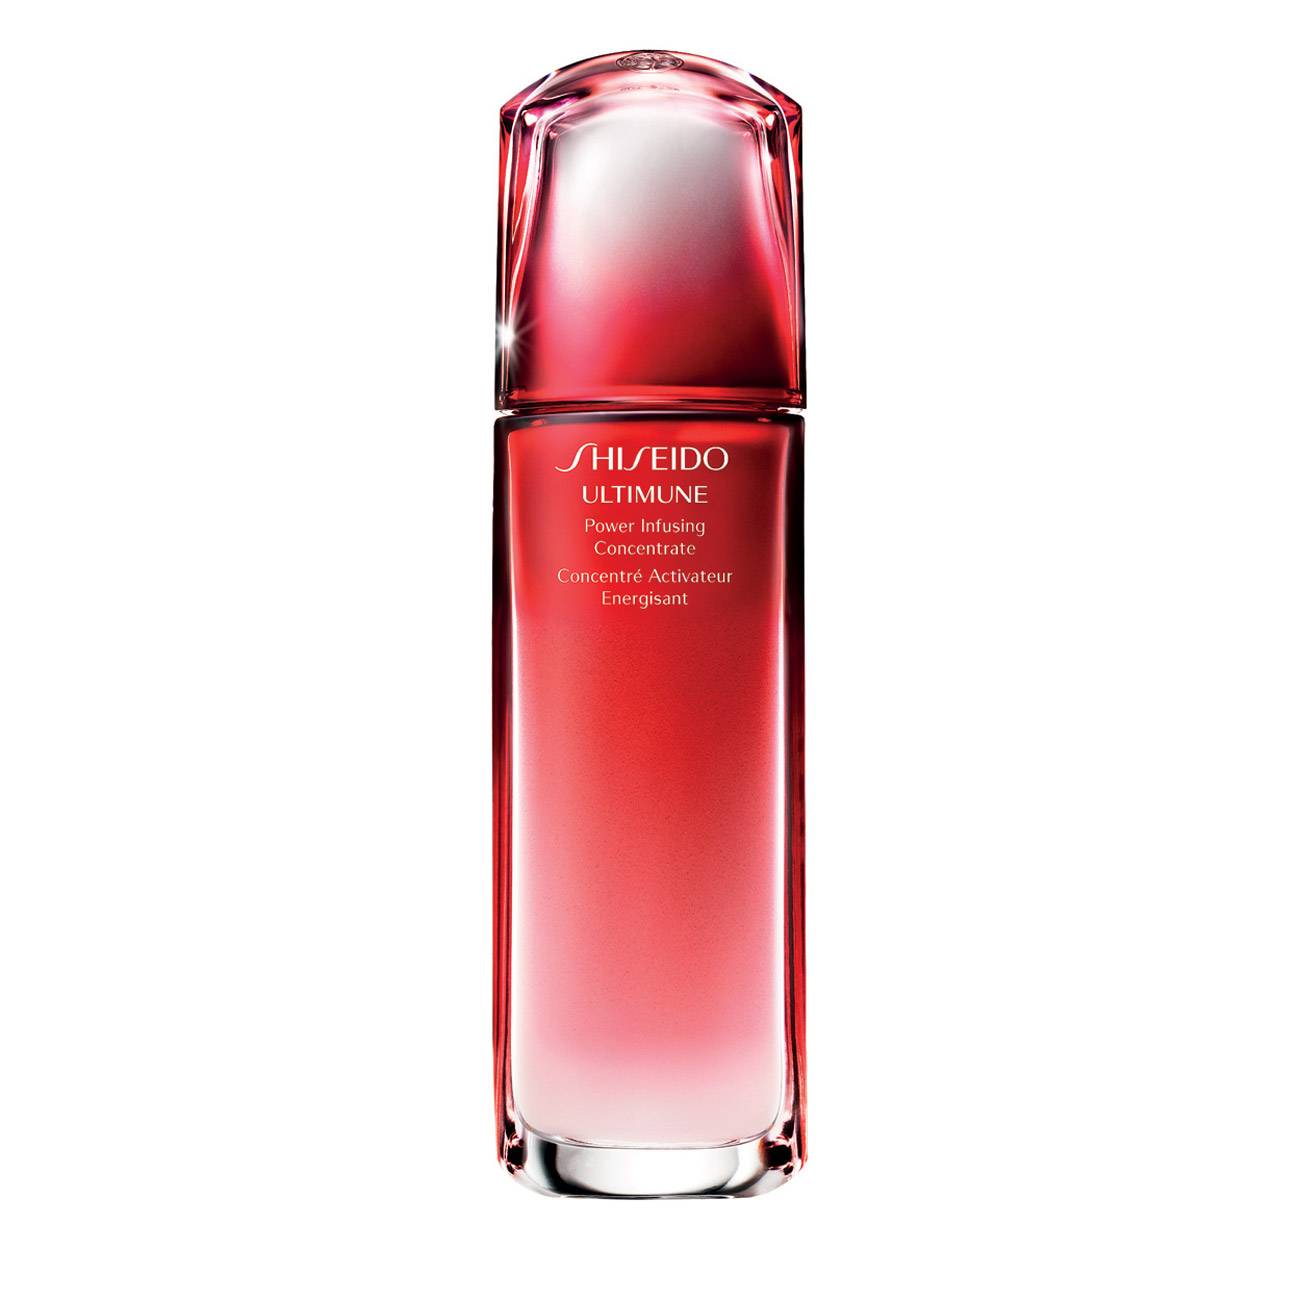 ULTIMUNE POWER INFUSING CONCENTRATE 100ml Shiseido bestvalue.eu